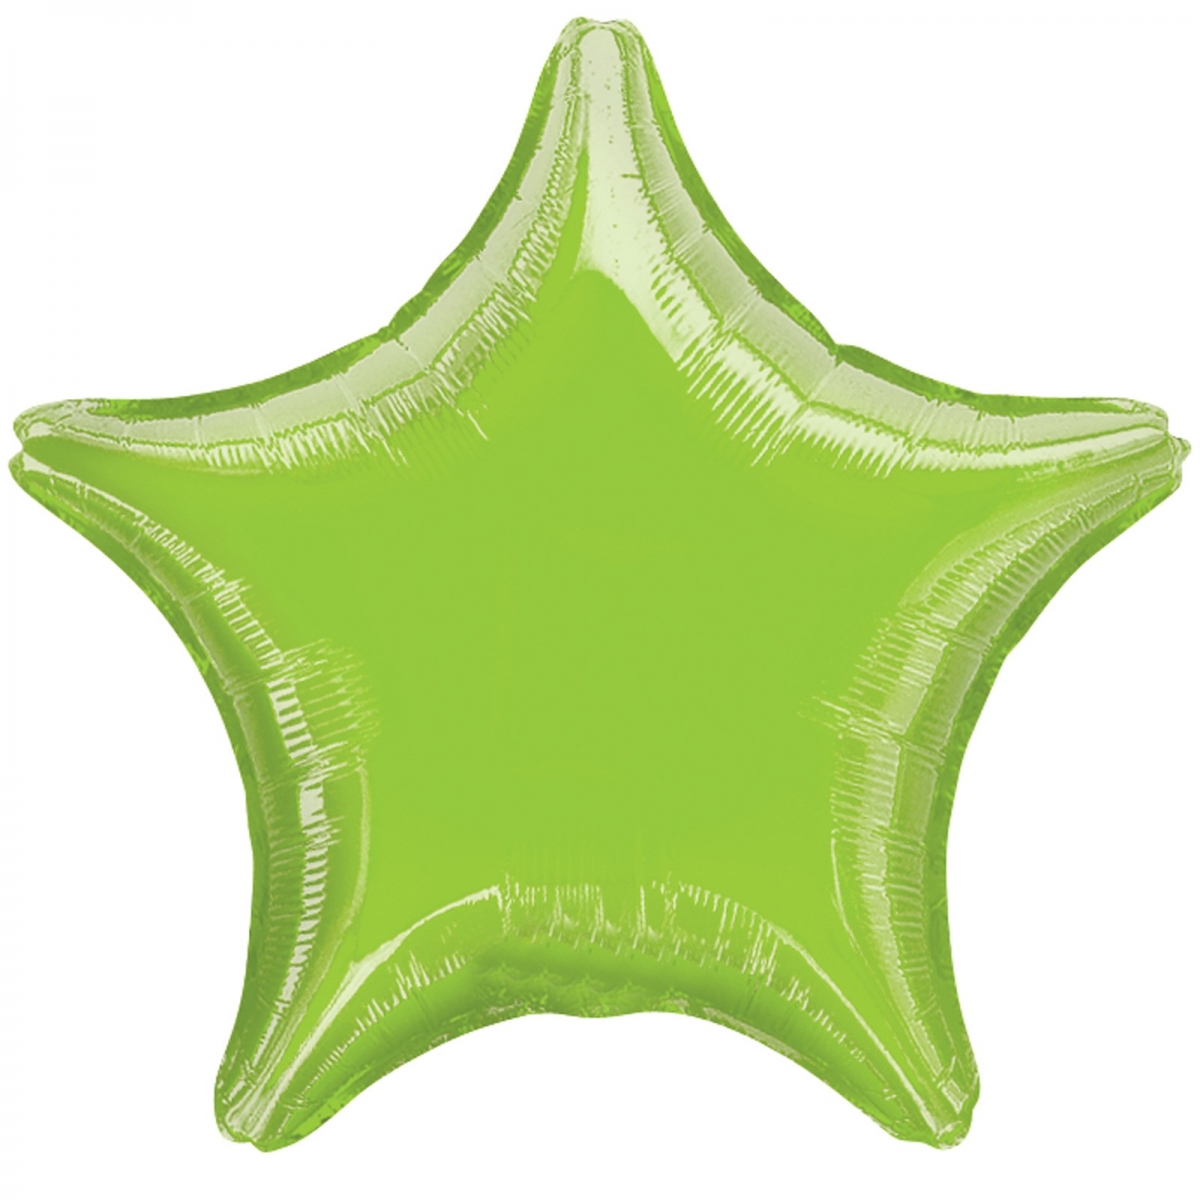 19" Foil Star - Lime Green balloon